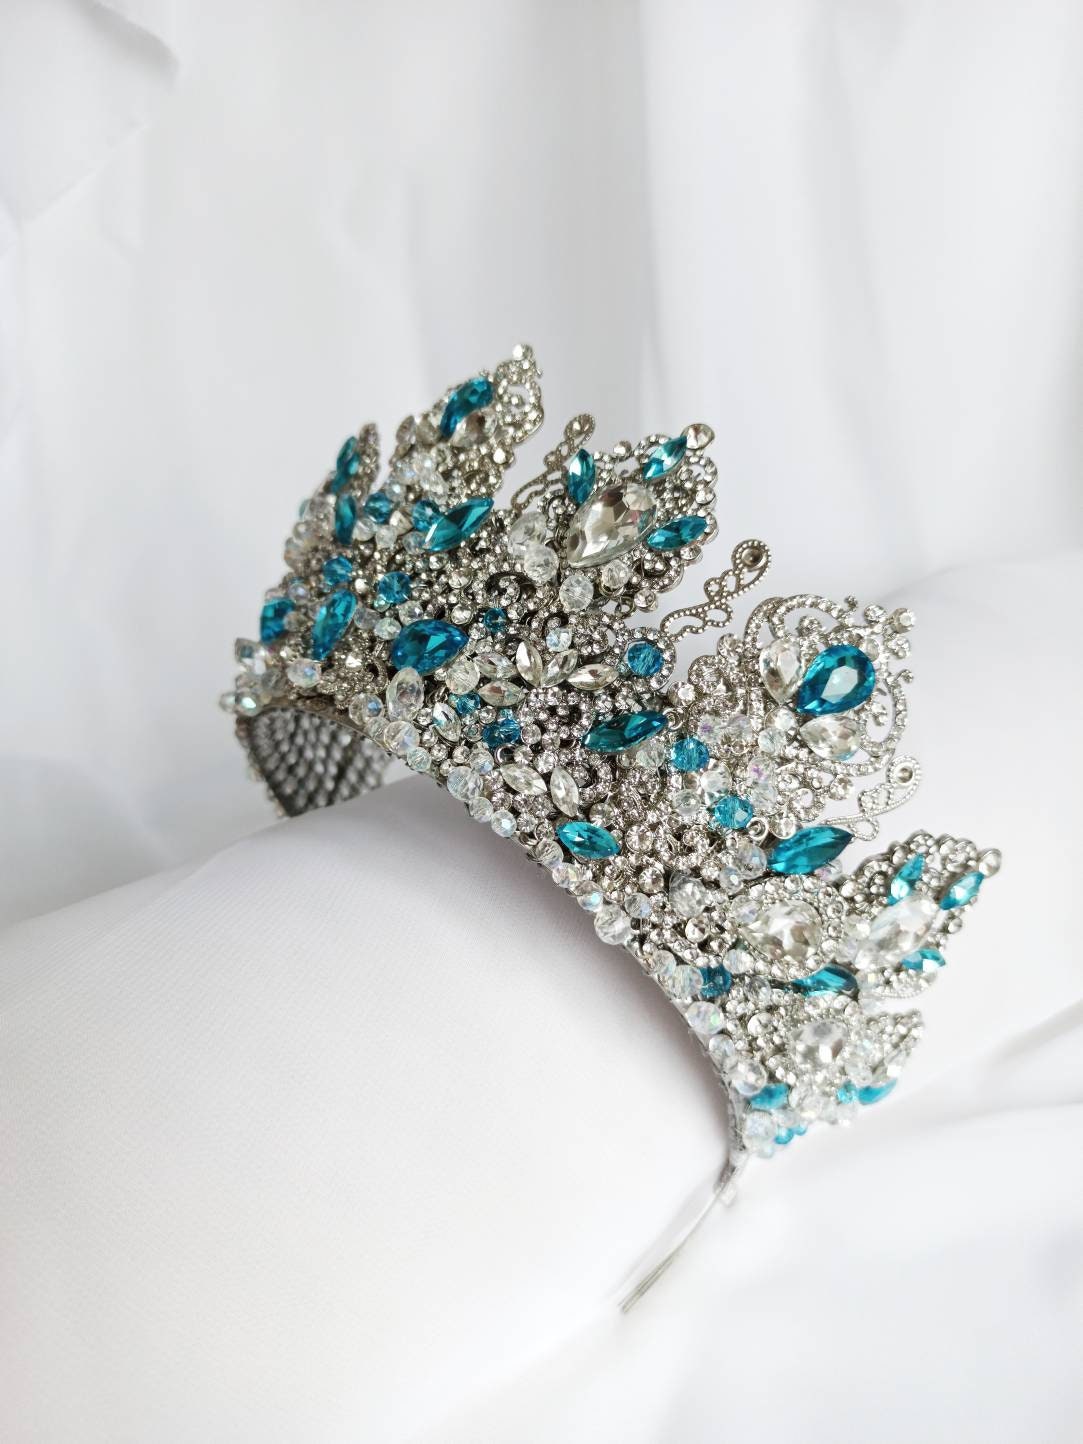 Blue wedding tiara for bride Wedding Hair Accessories Bridal | Etsy